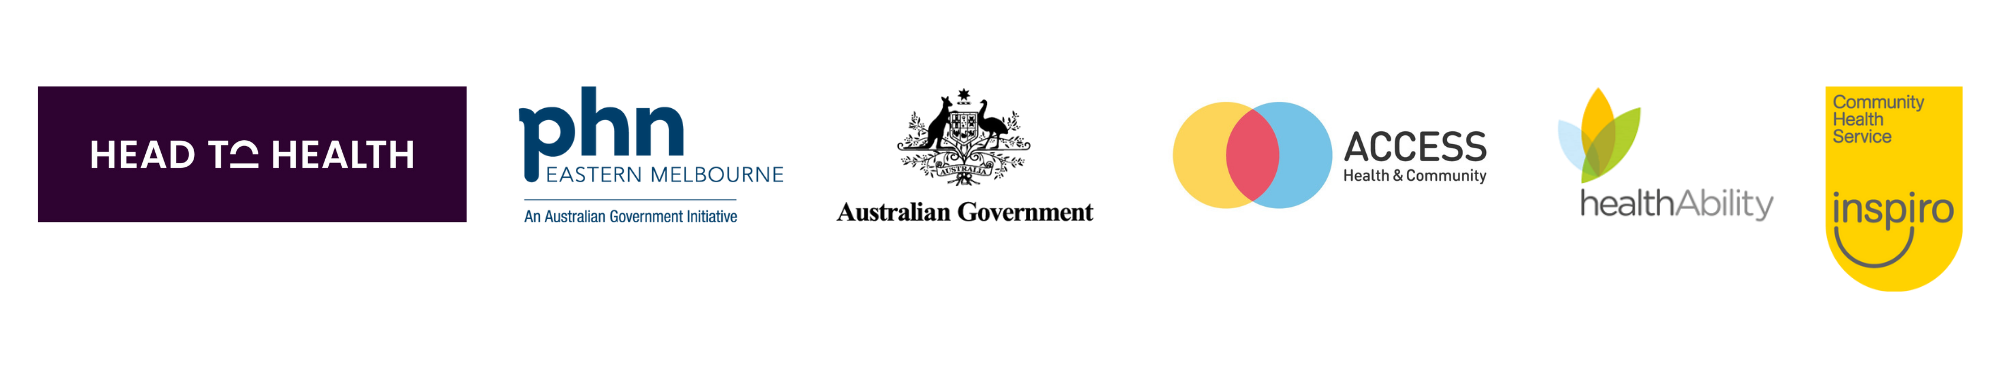 Head to Health, EMPHN, Australian Government, AccessHC, healthAbiliy and Inspiro logos